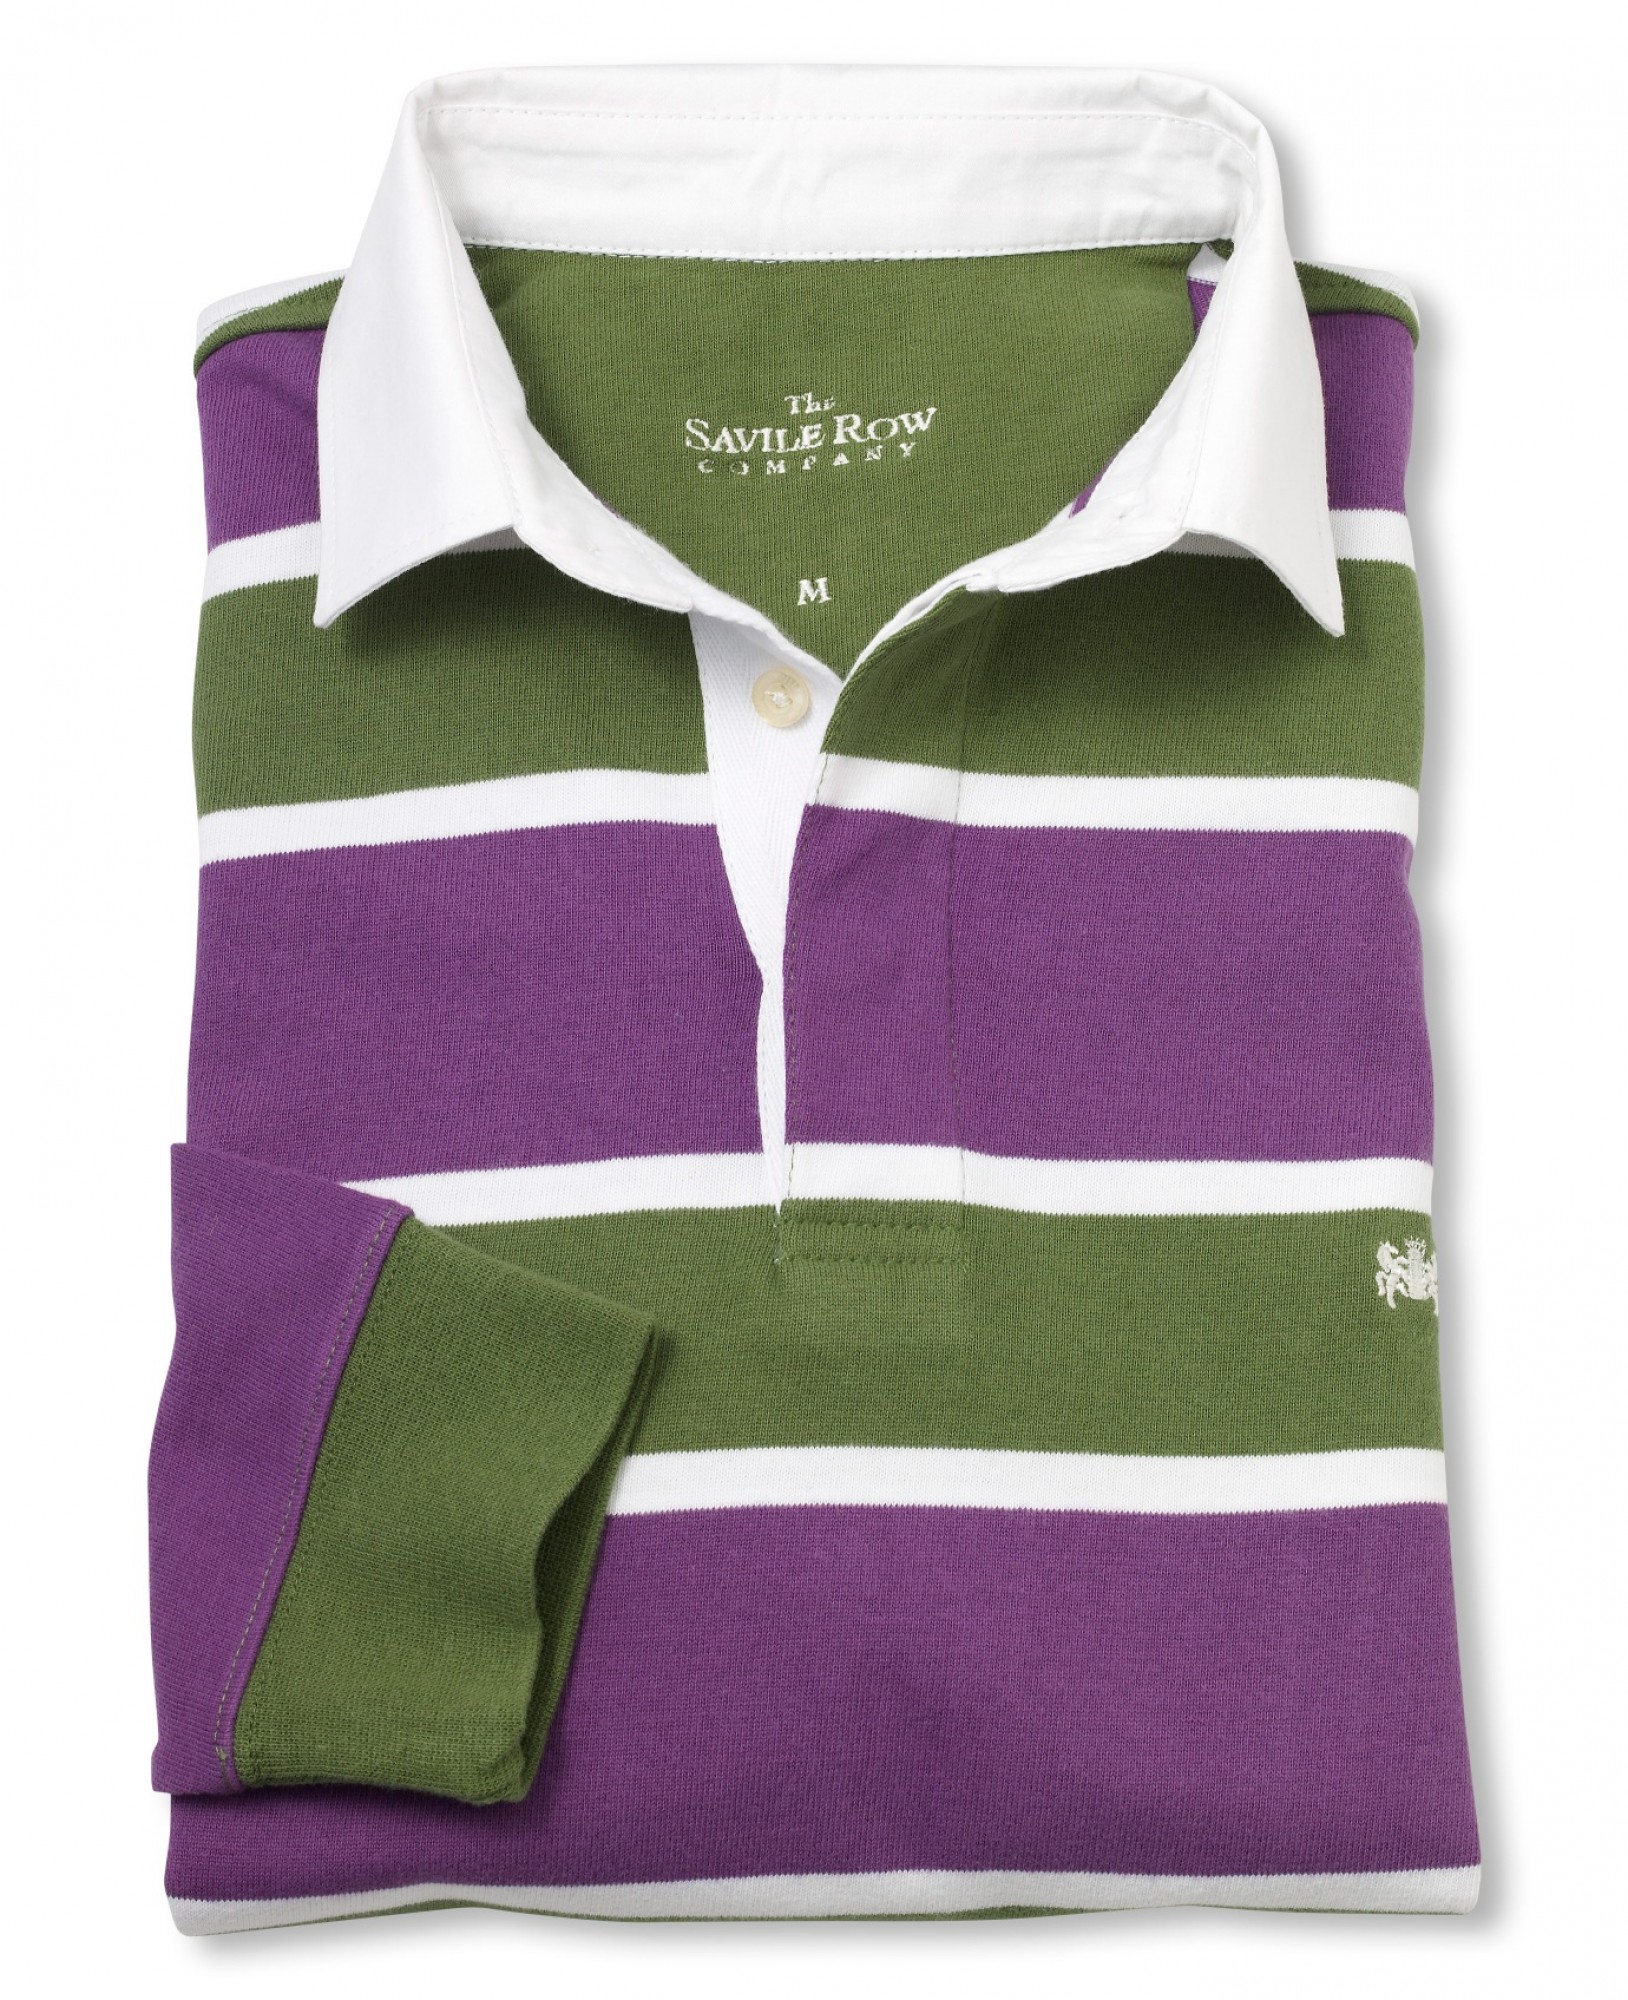 Savile Row Co. Purple White Green Stripe Rugby Shirt M